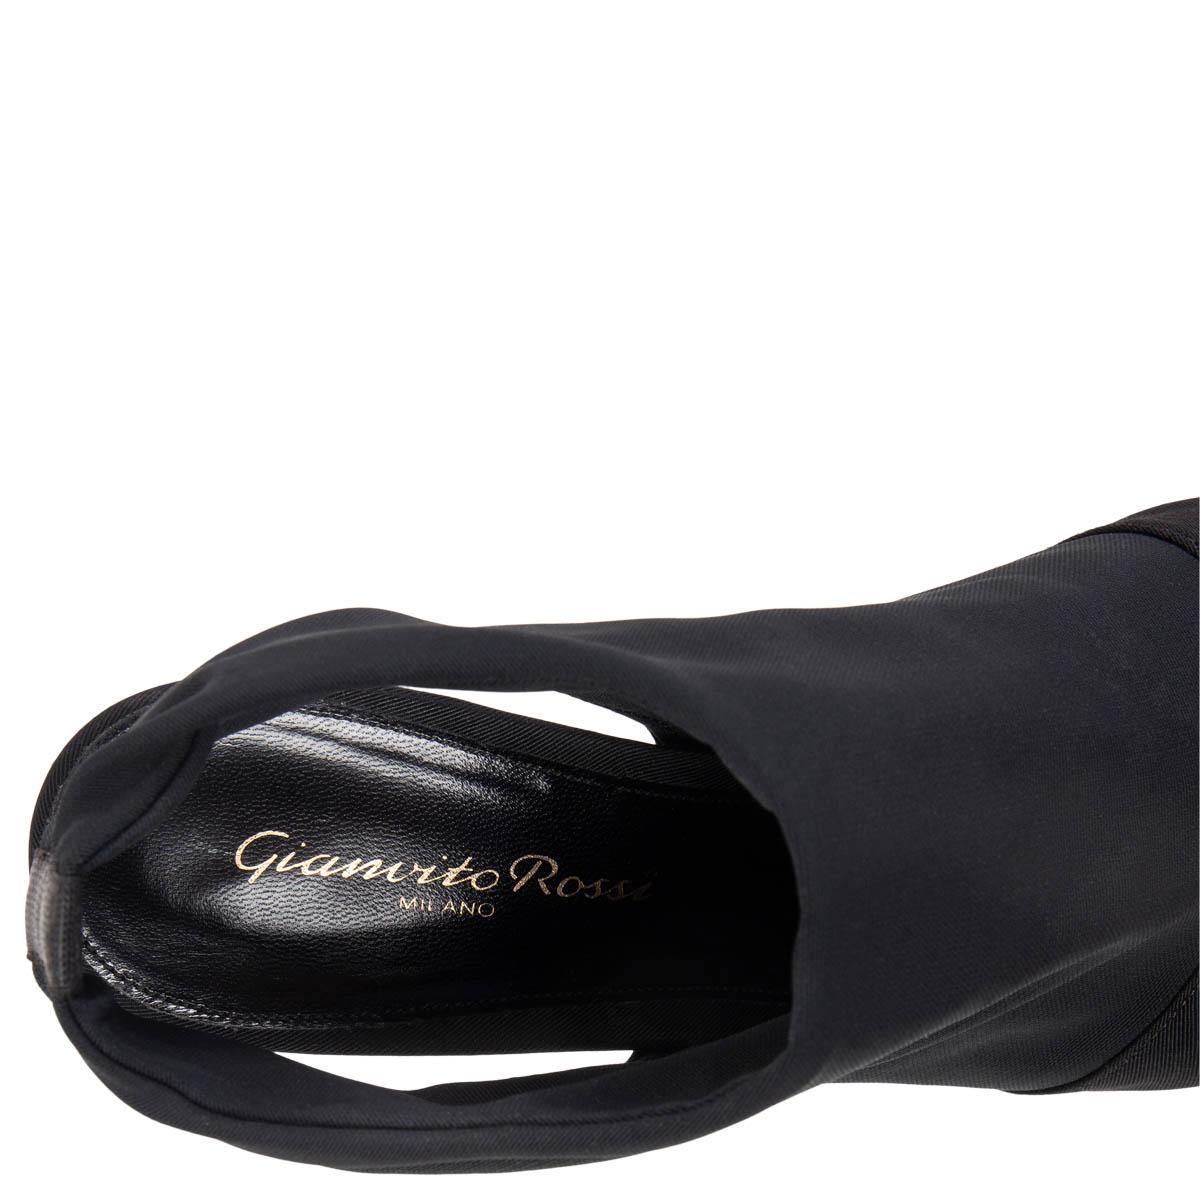 GIANVITO ROSSI black Grosgrain PEEP TOE SLINGBACK Pumps Shoes 37 For Sale 1